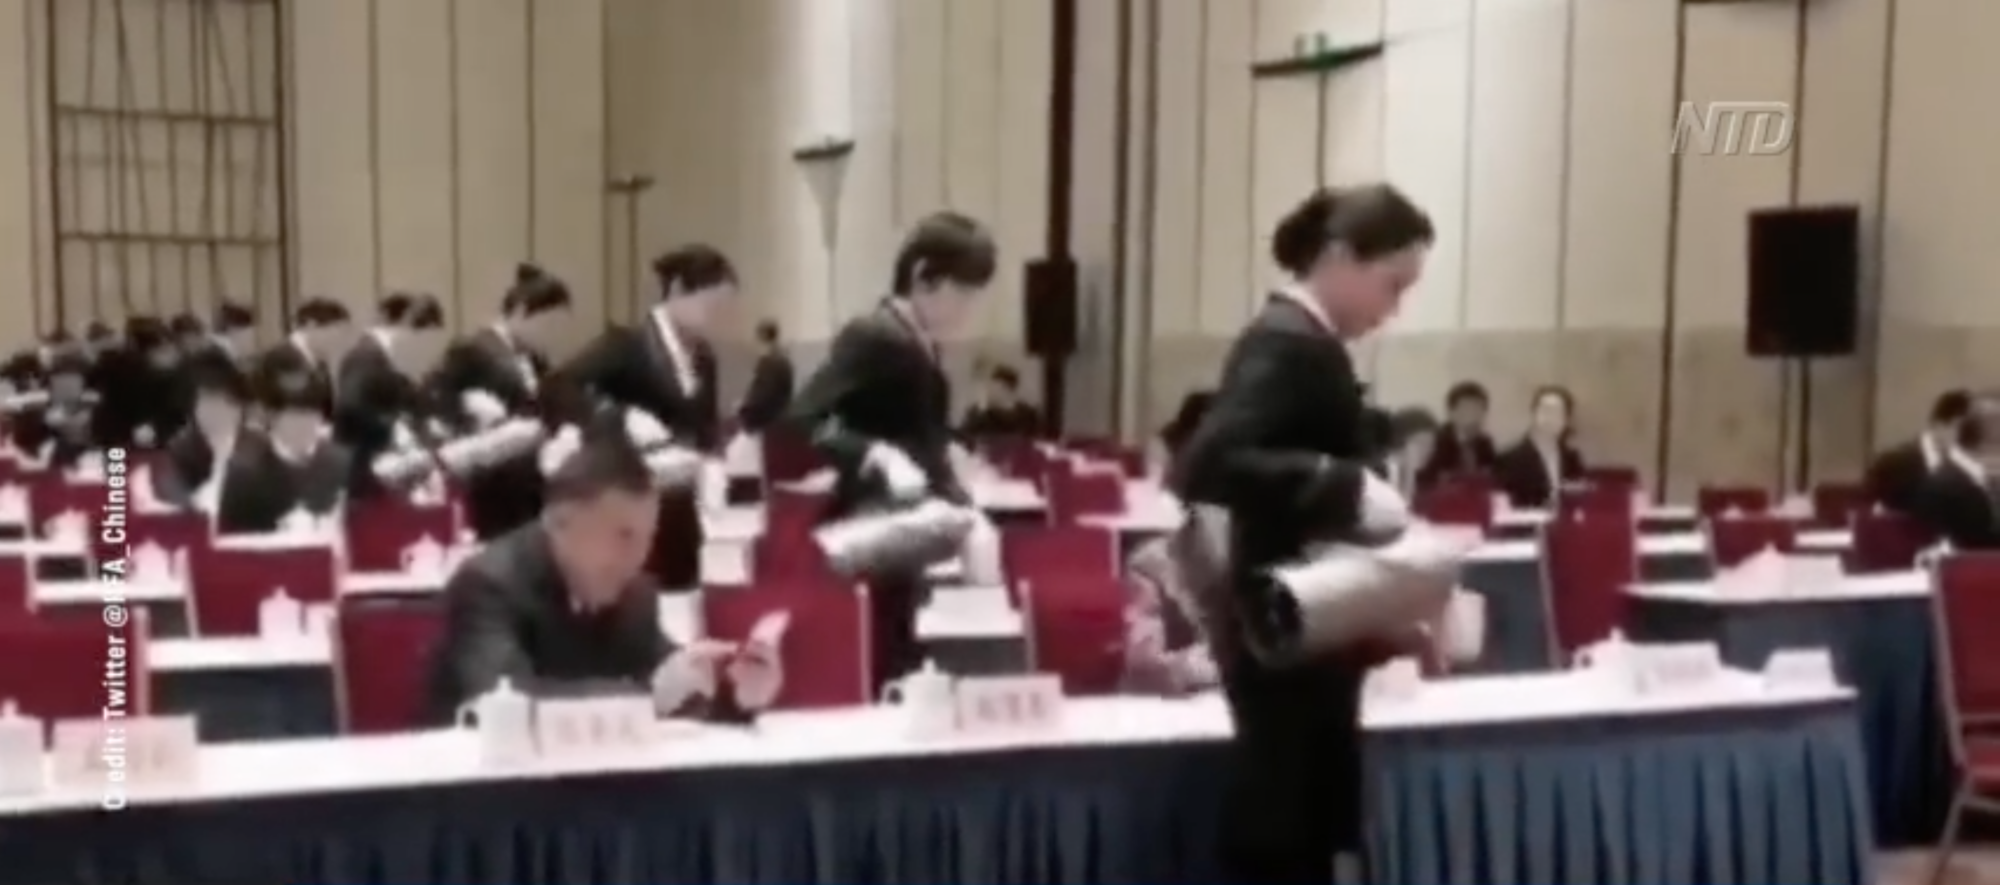 Robotic Waitstaff Serve Tea at Political Meeting in China